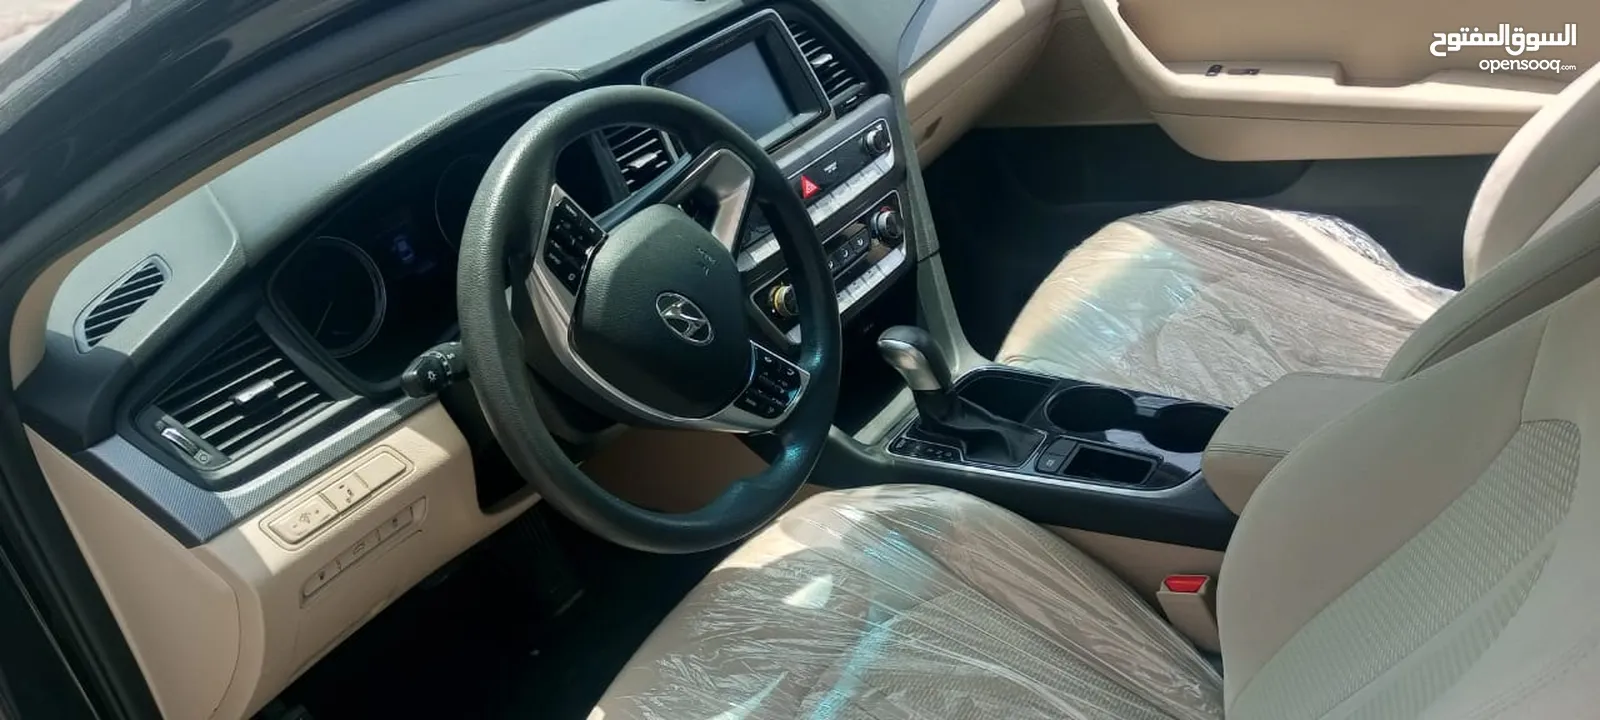 Hyundai Sonata 2018 (Reason: Having SUV in use)